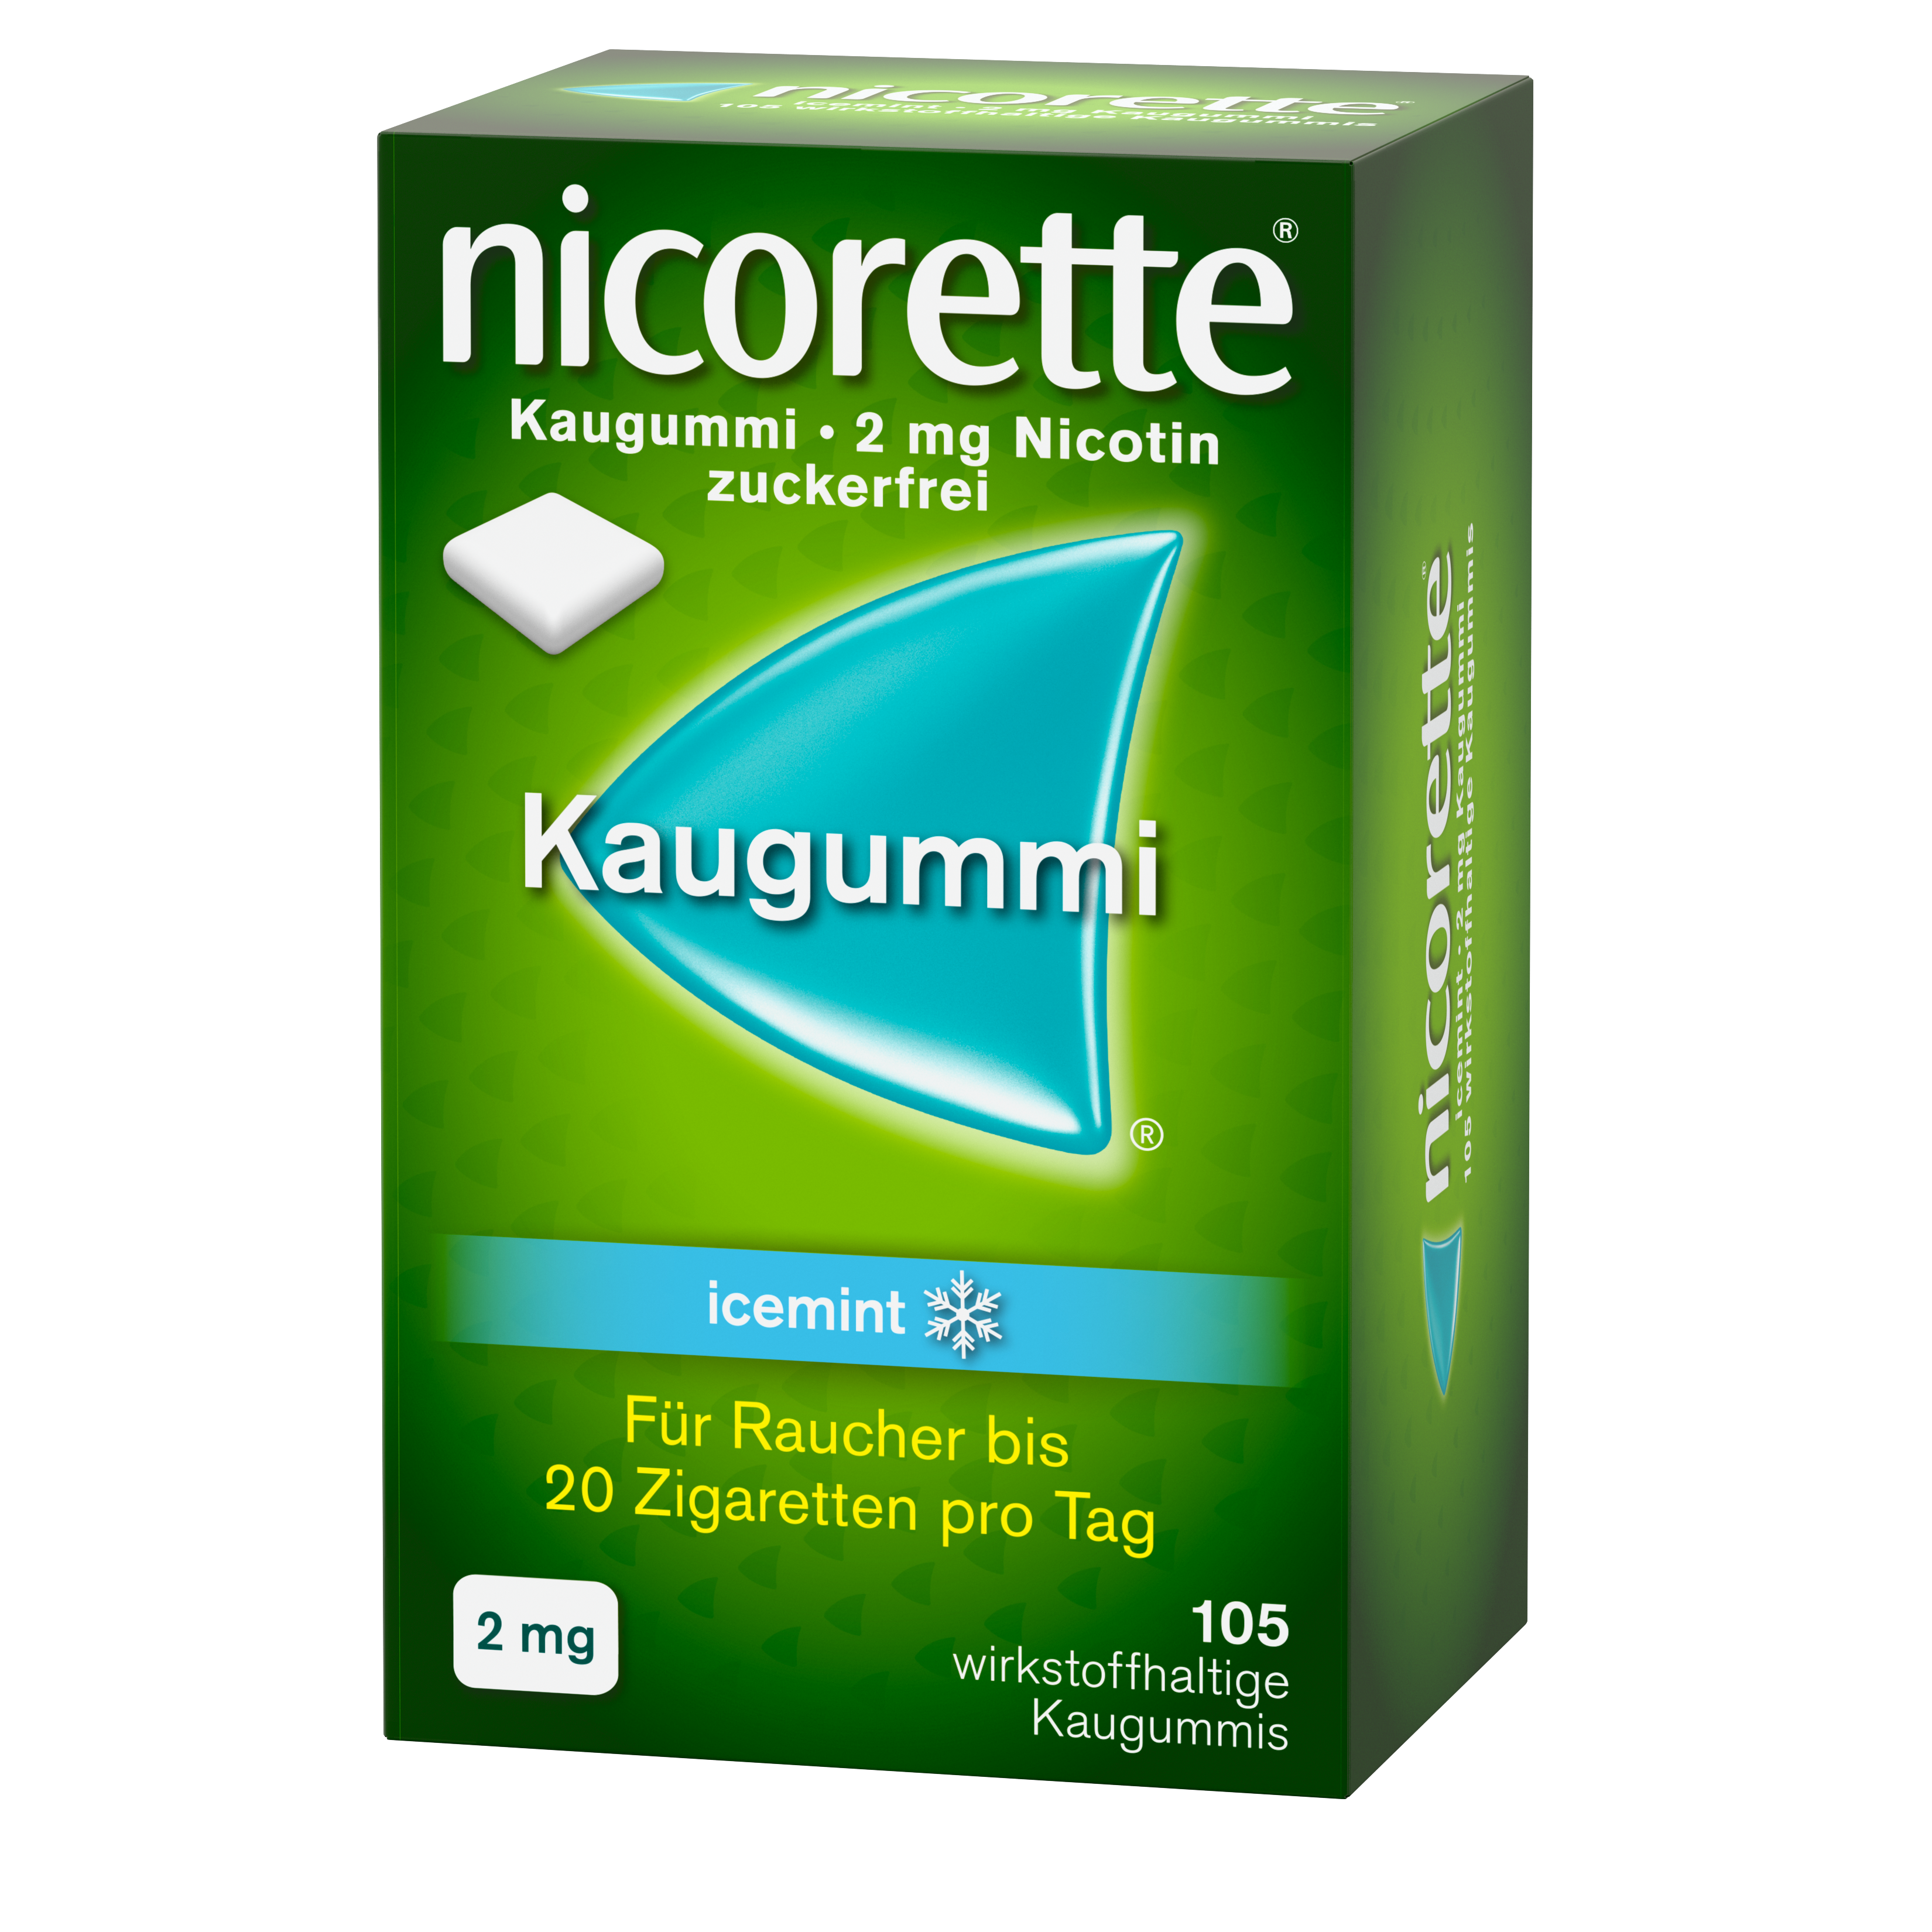 nicorette® mint Spray – Smartes Nikotinspray